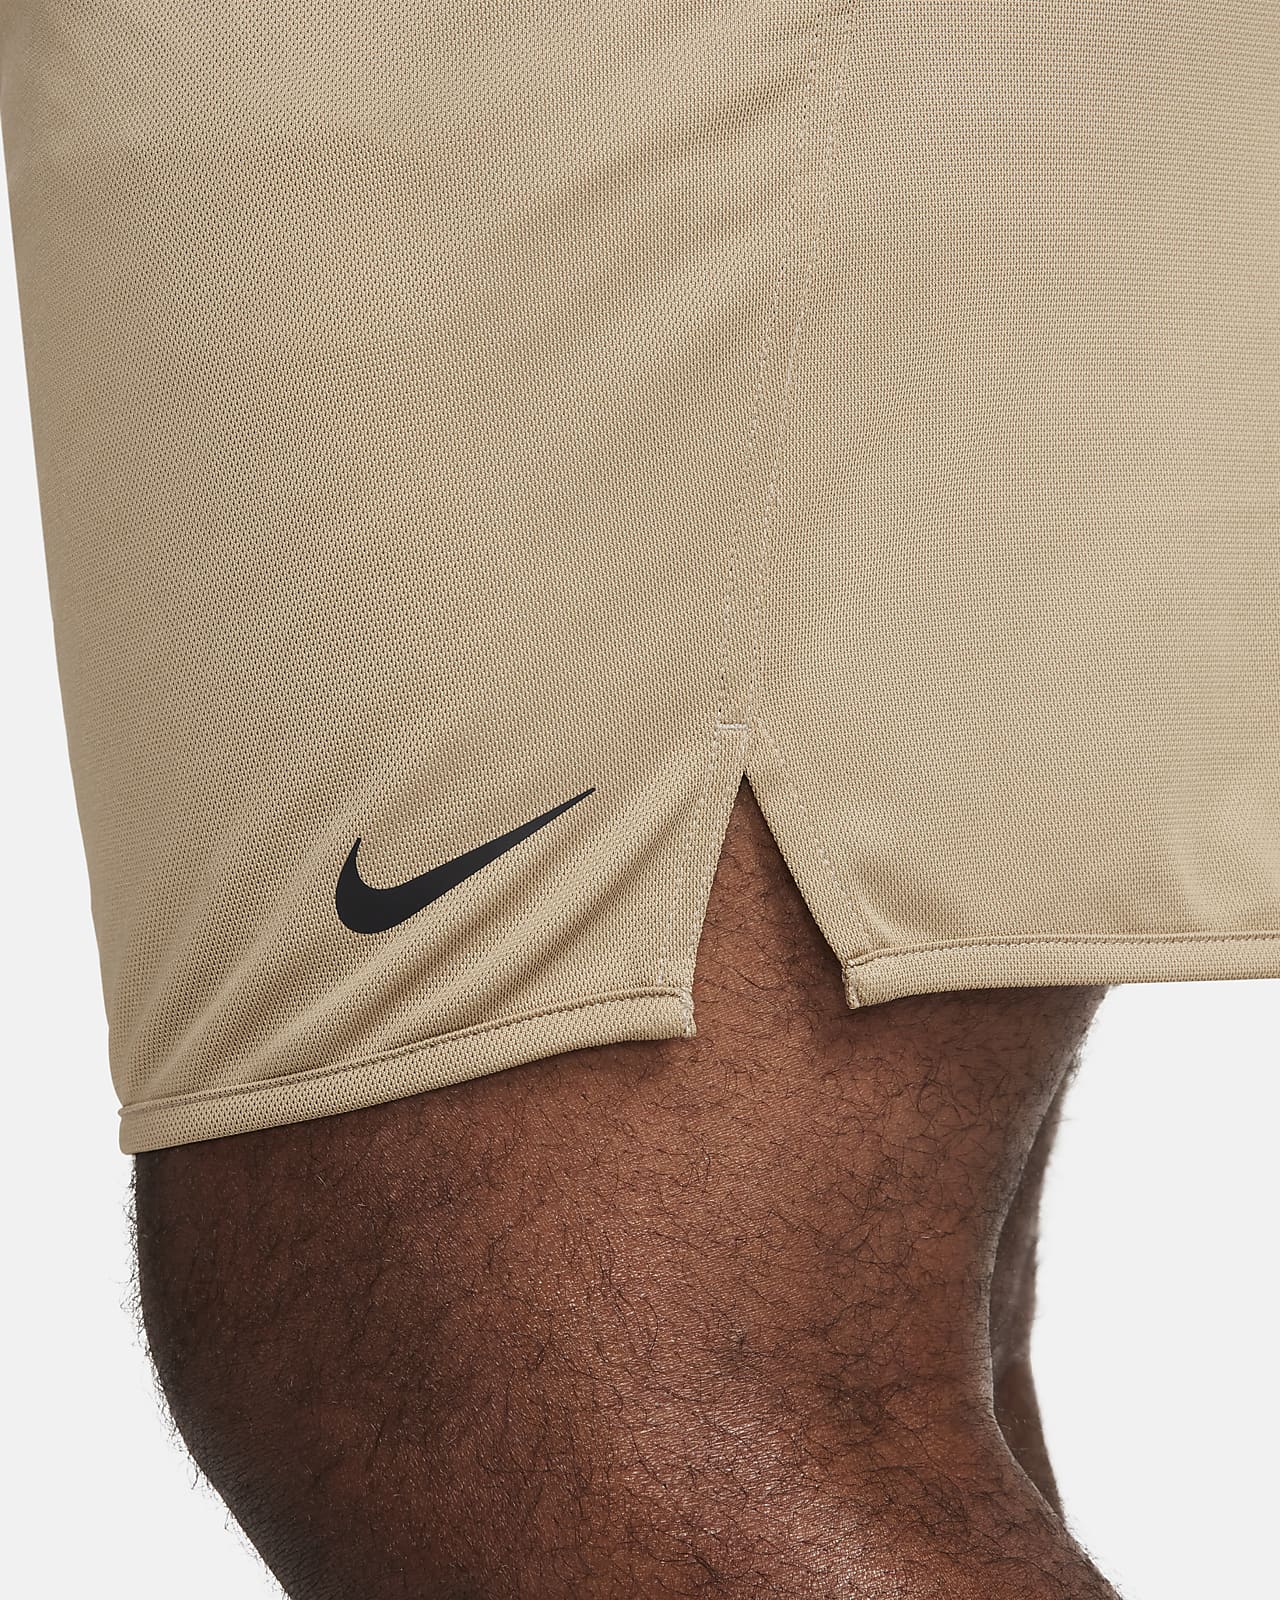 Nike, Dri-FIT Form Men's 7 Unlined Versatile Shorts, Performance Shorts